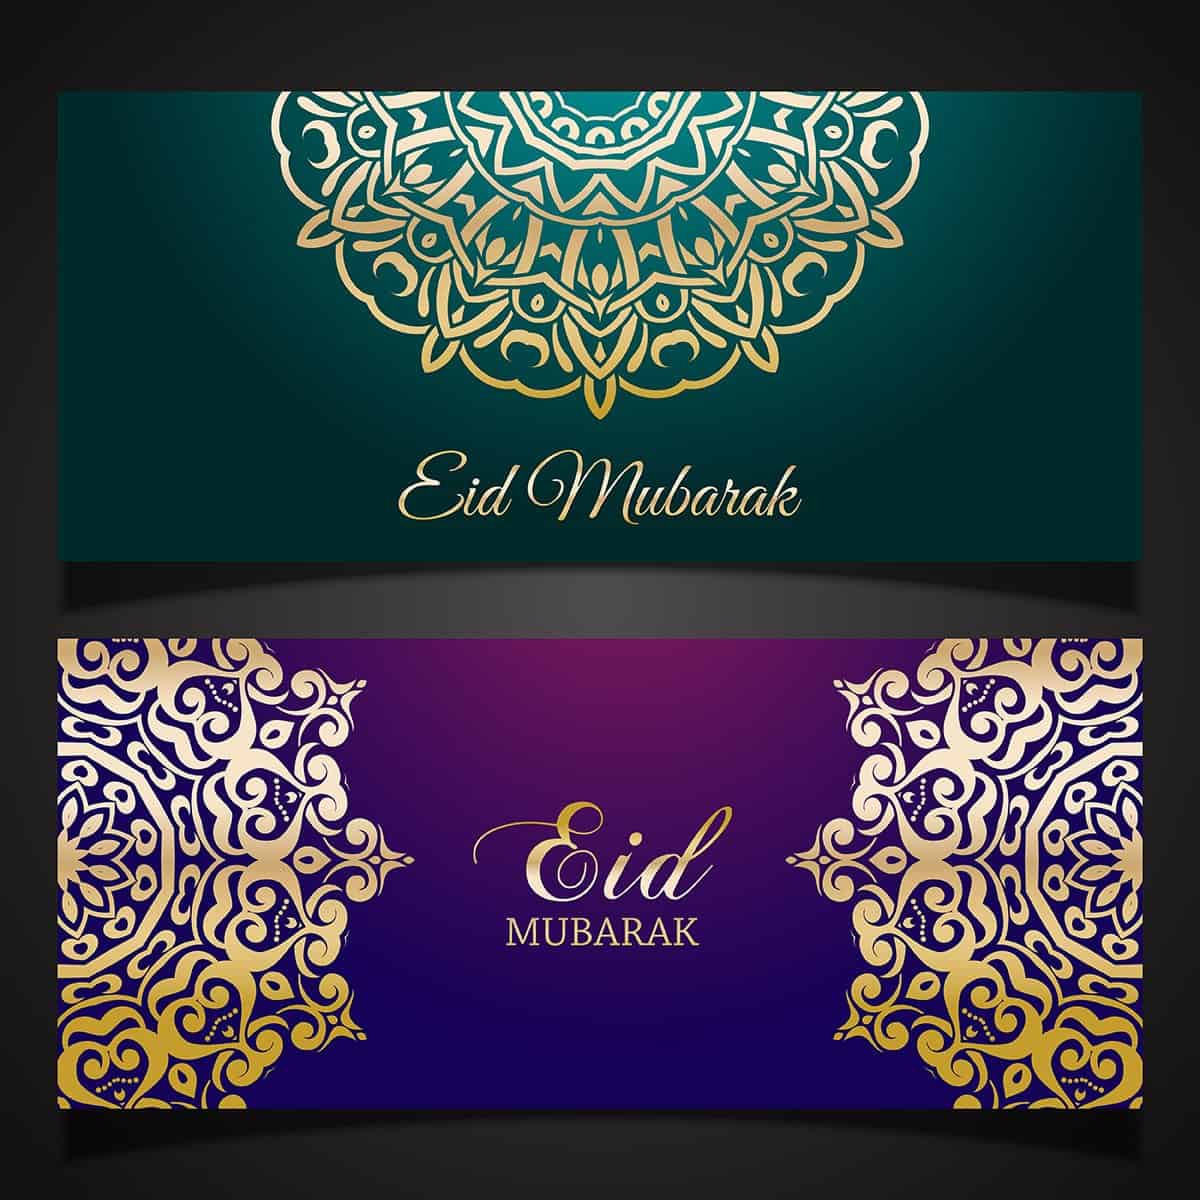 Backgrounds for Eid mubarak